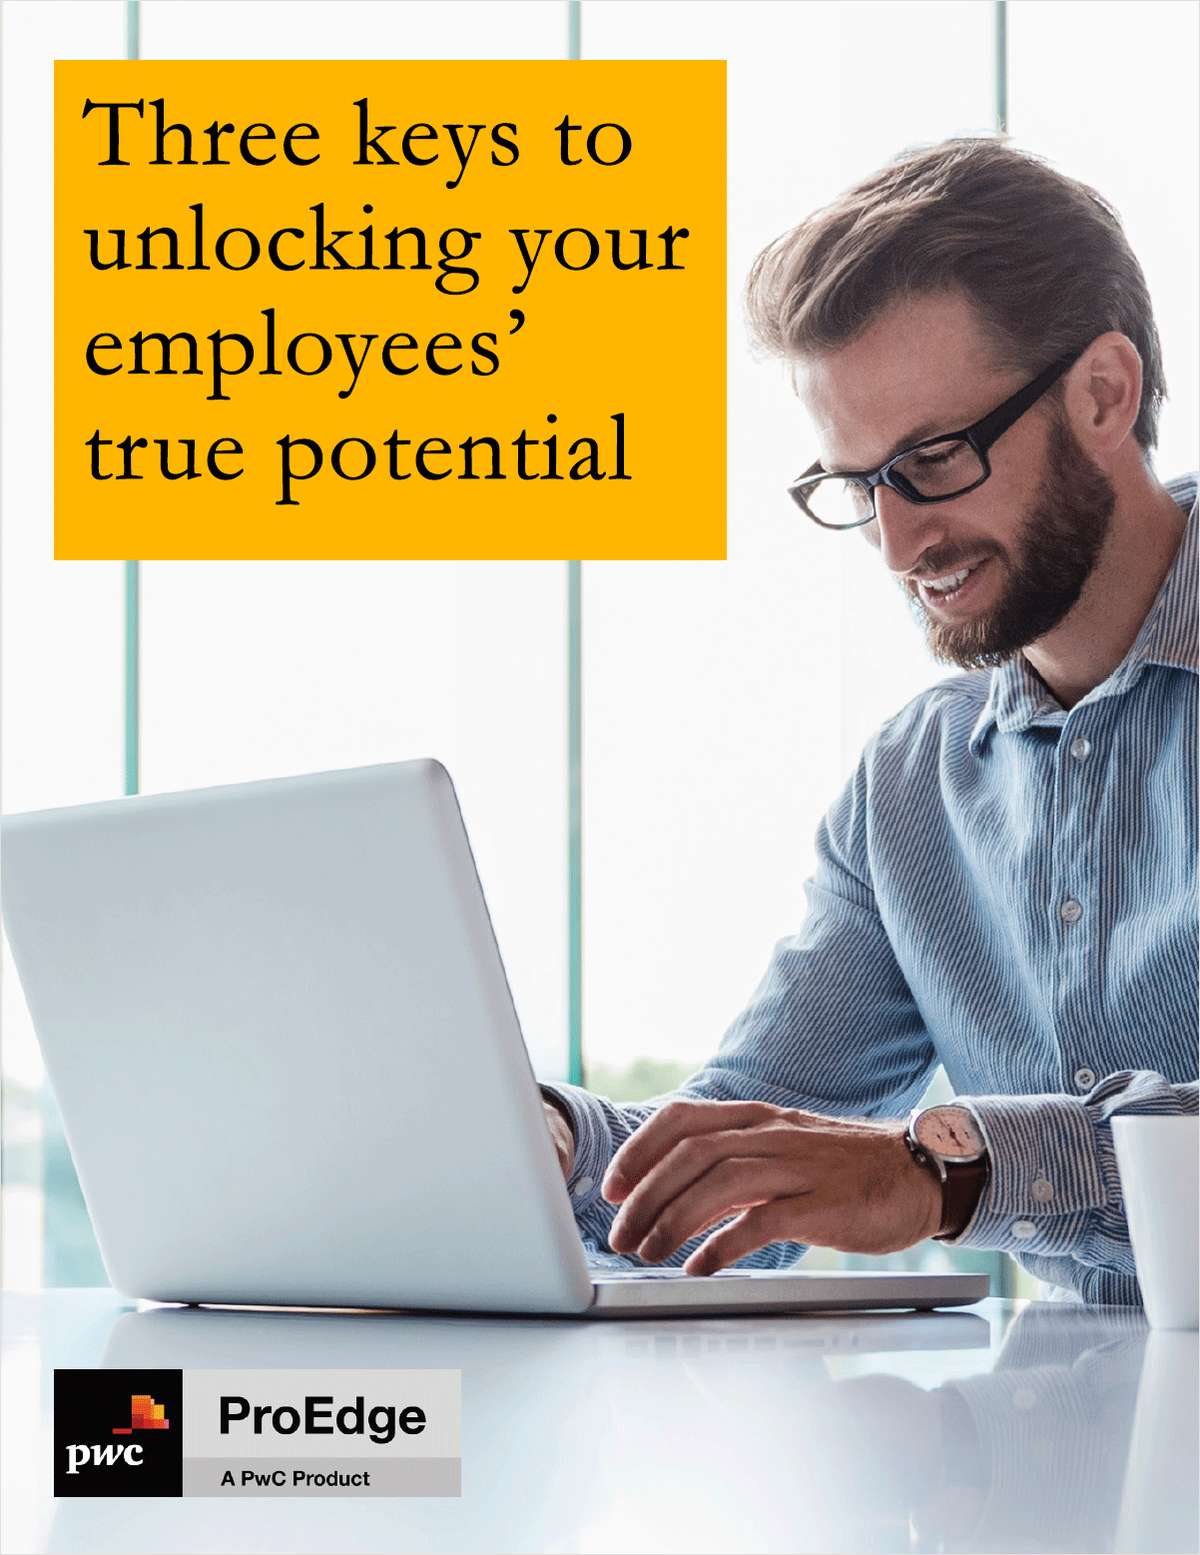 Three keys to unlocking your employees' true potential